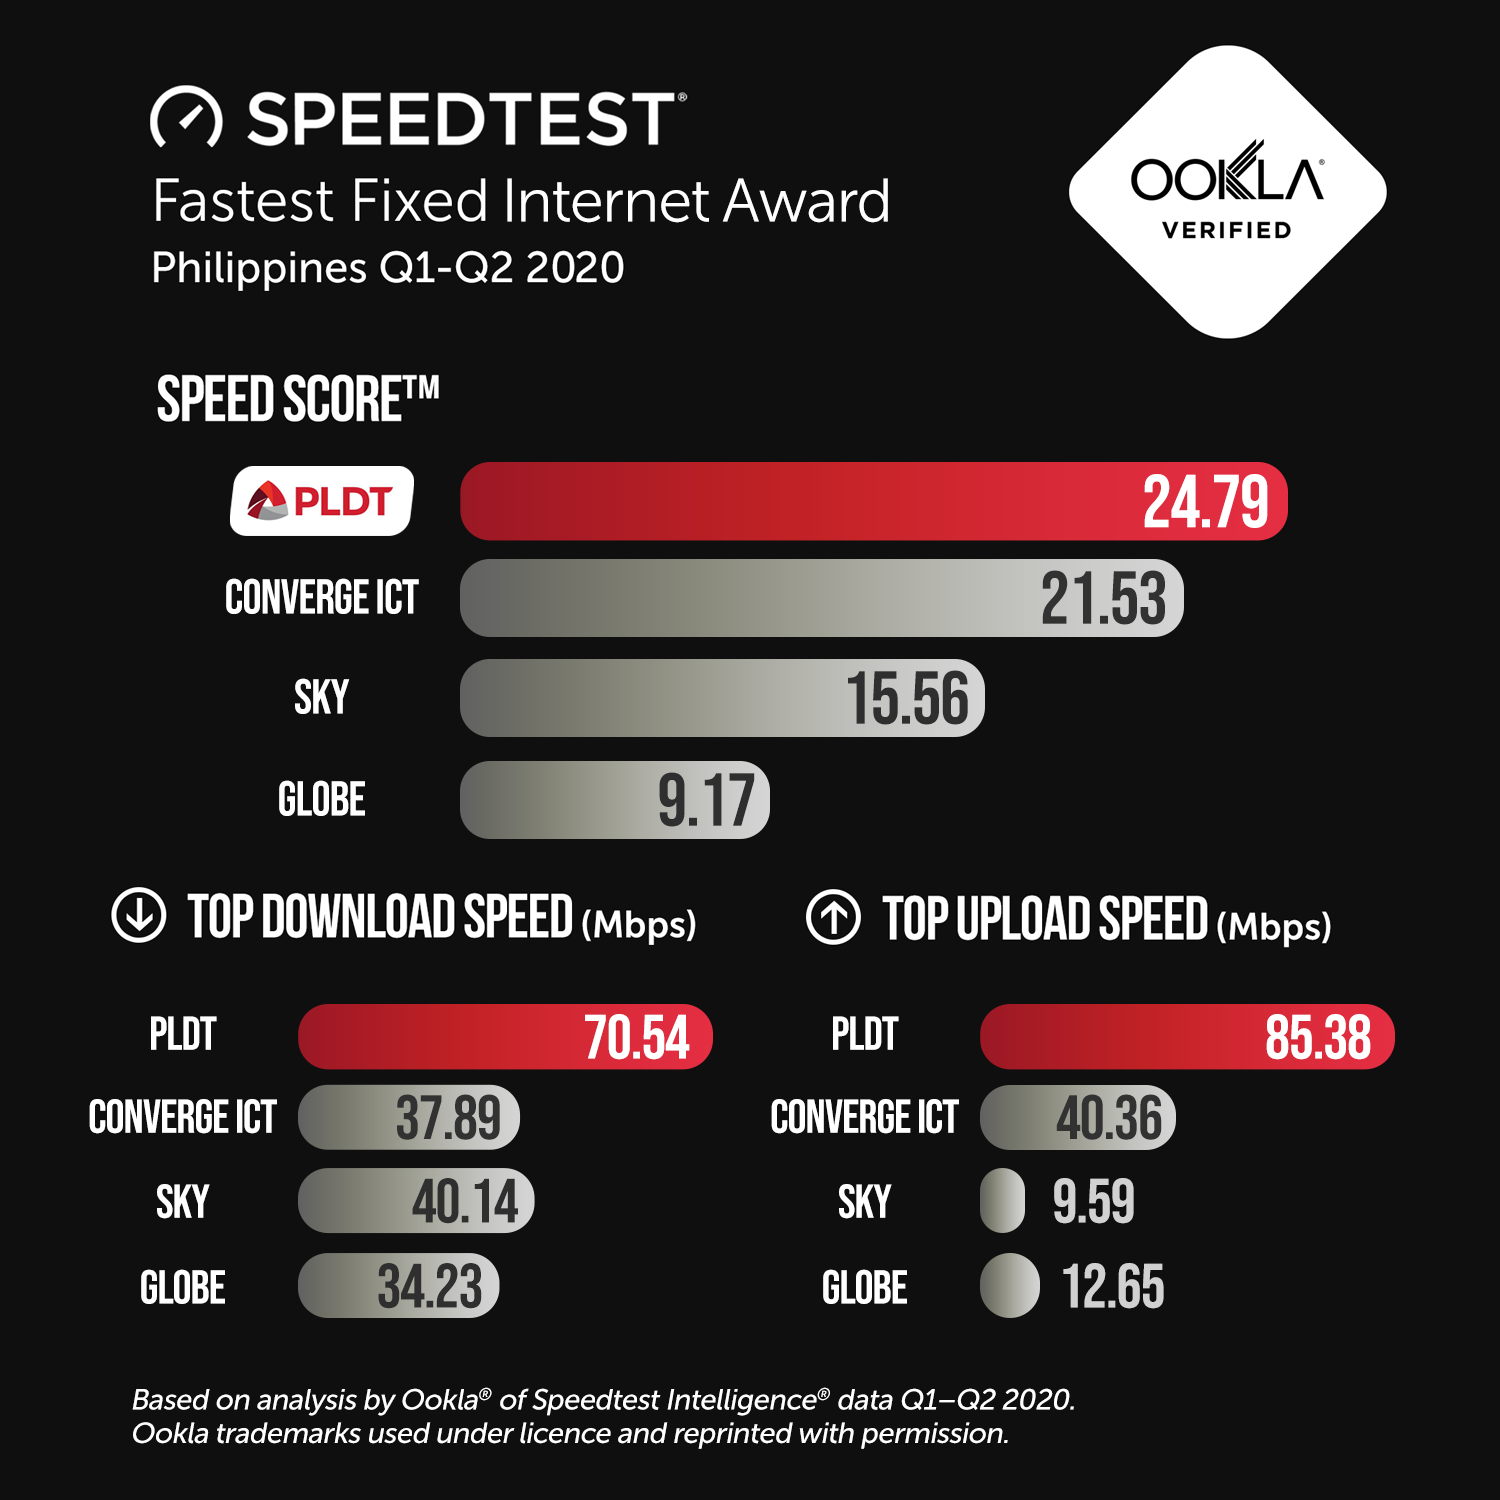 ookla speed test 5g